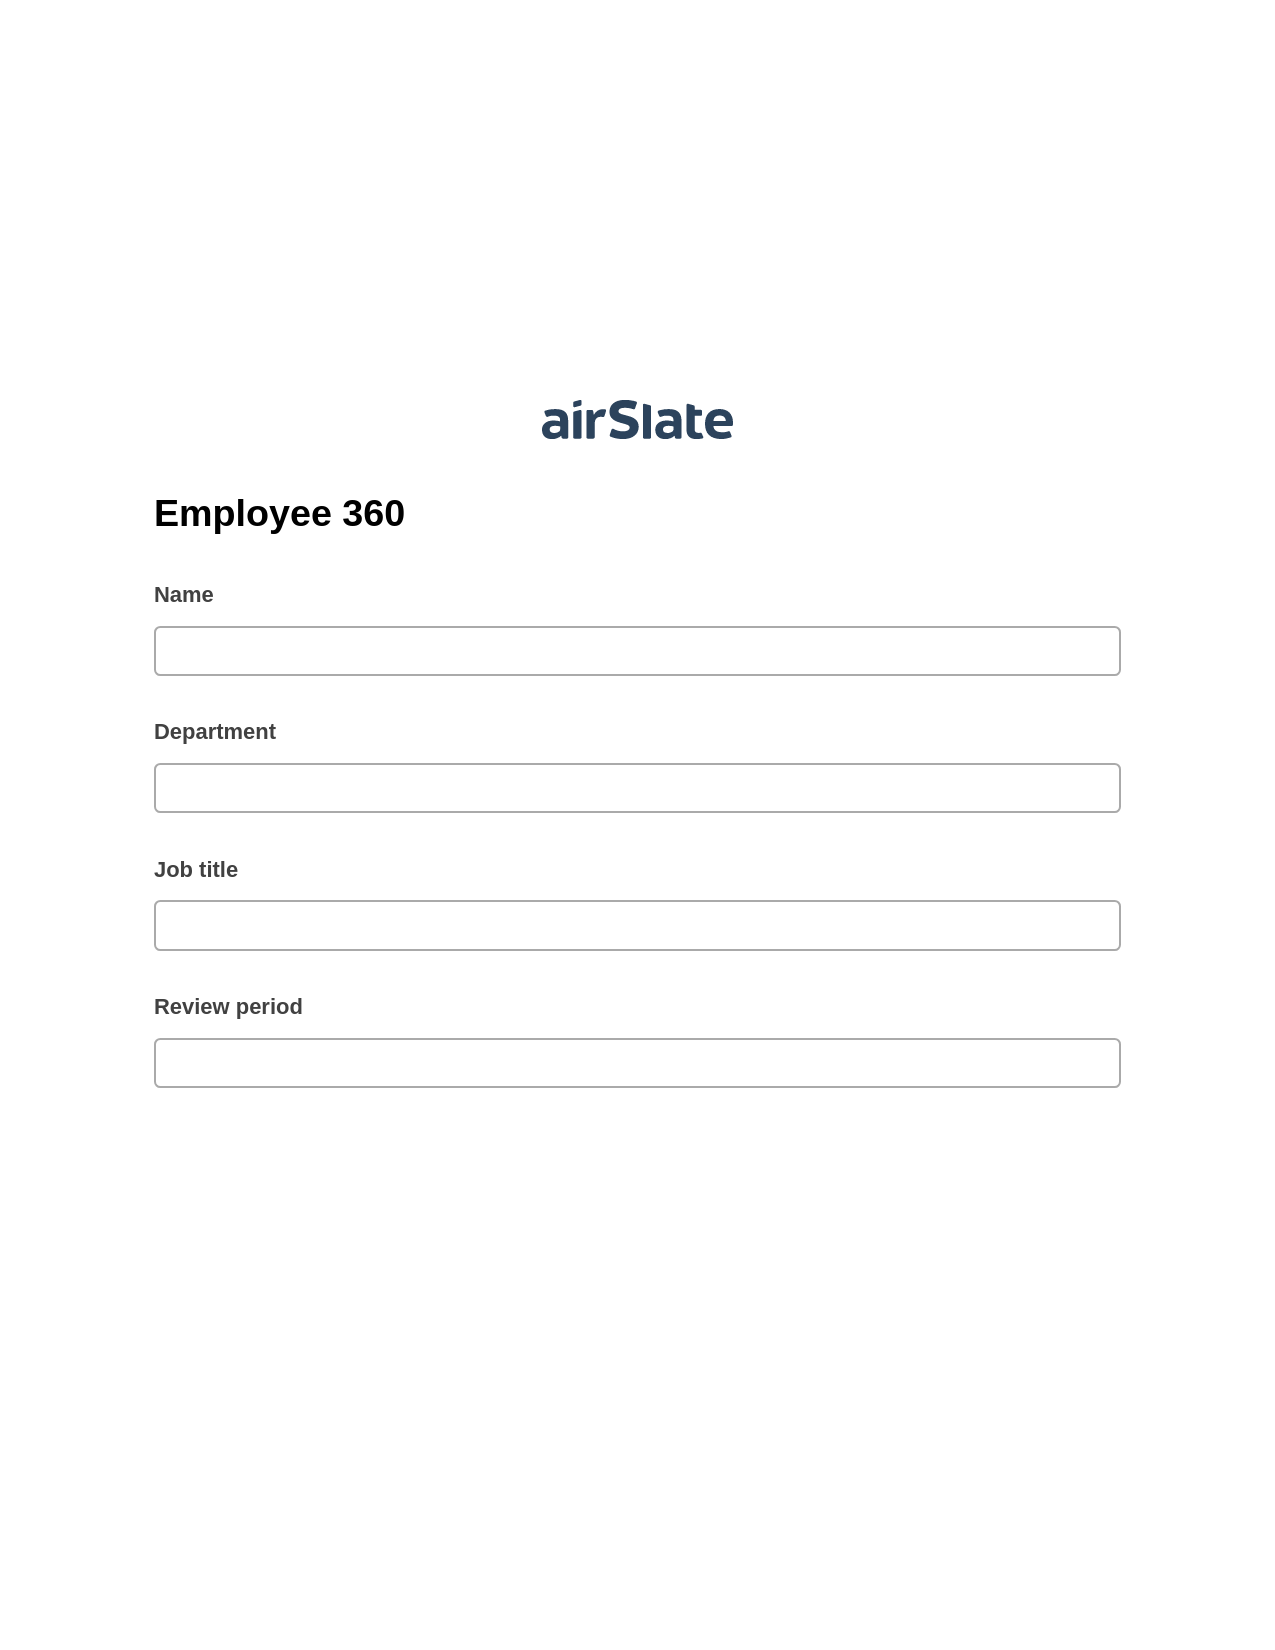 Employee 360 Pre-fill from CSV File Bot, Google Calendar Bot, Export to Google Sheet Bot